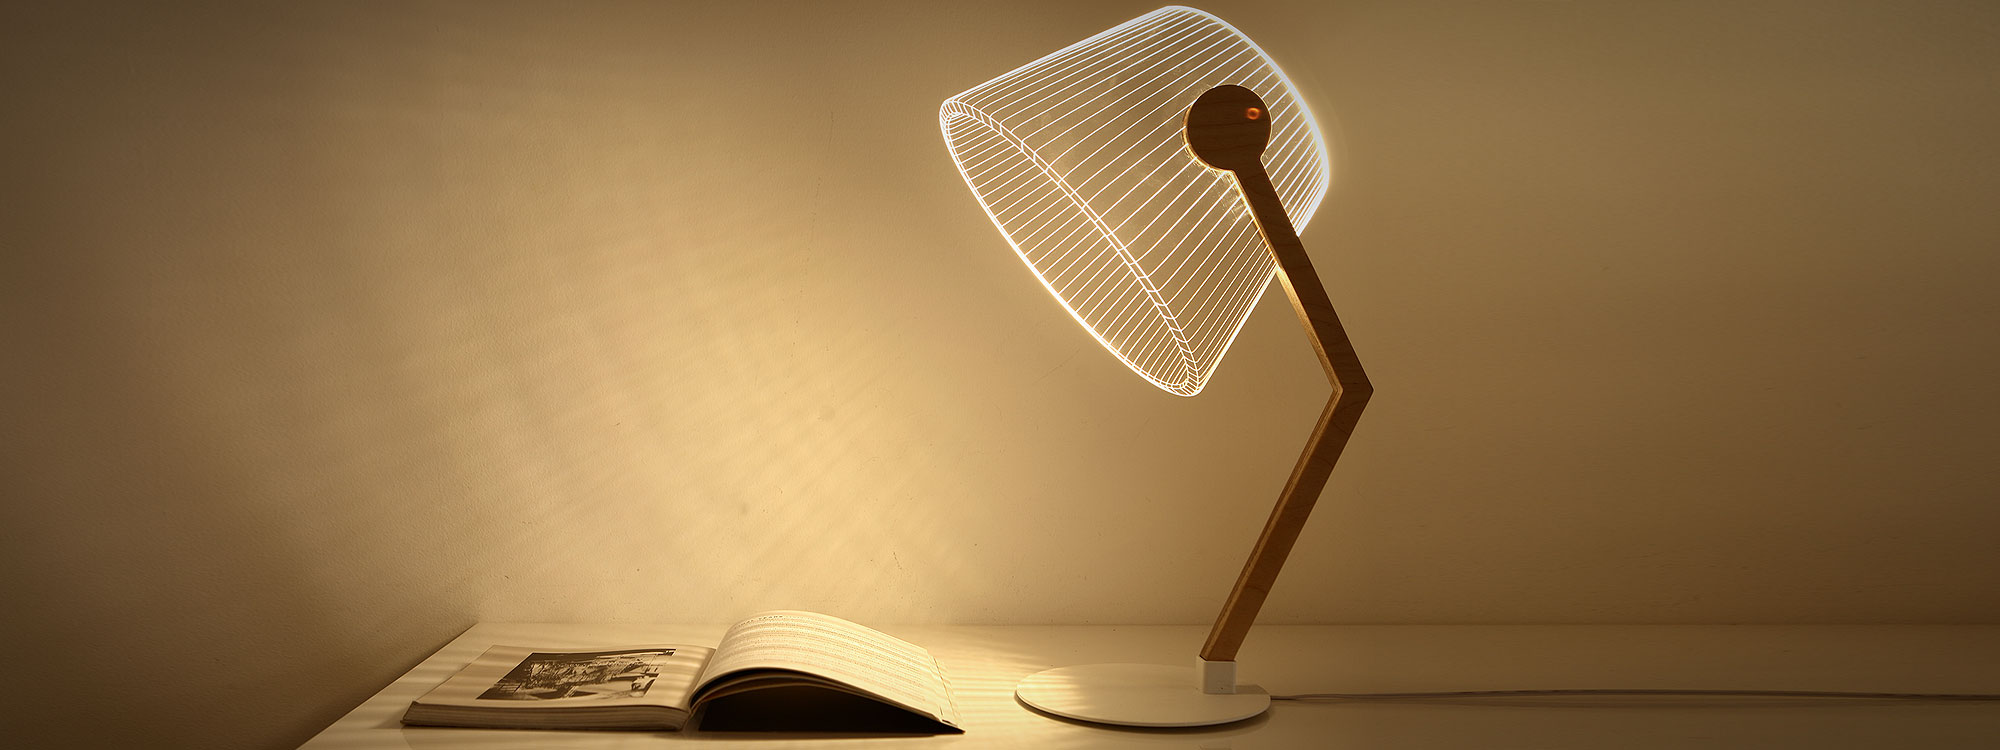 ZIGGi Desk Lamp From Bulbing Designer LED Lamp Collection By Studio Cheha. Modern Design Table Lamp, Contemporary Floor Lamp, Designer Pendant Light Collection - Unique Designer Gift